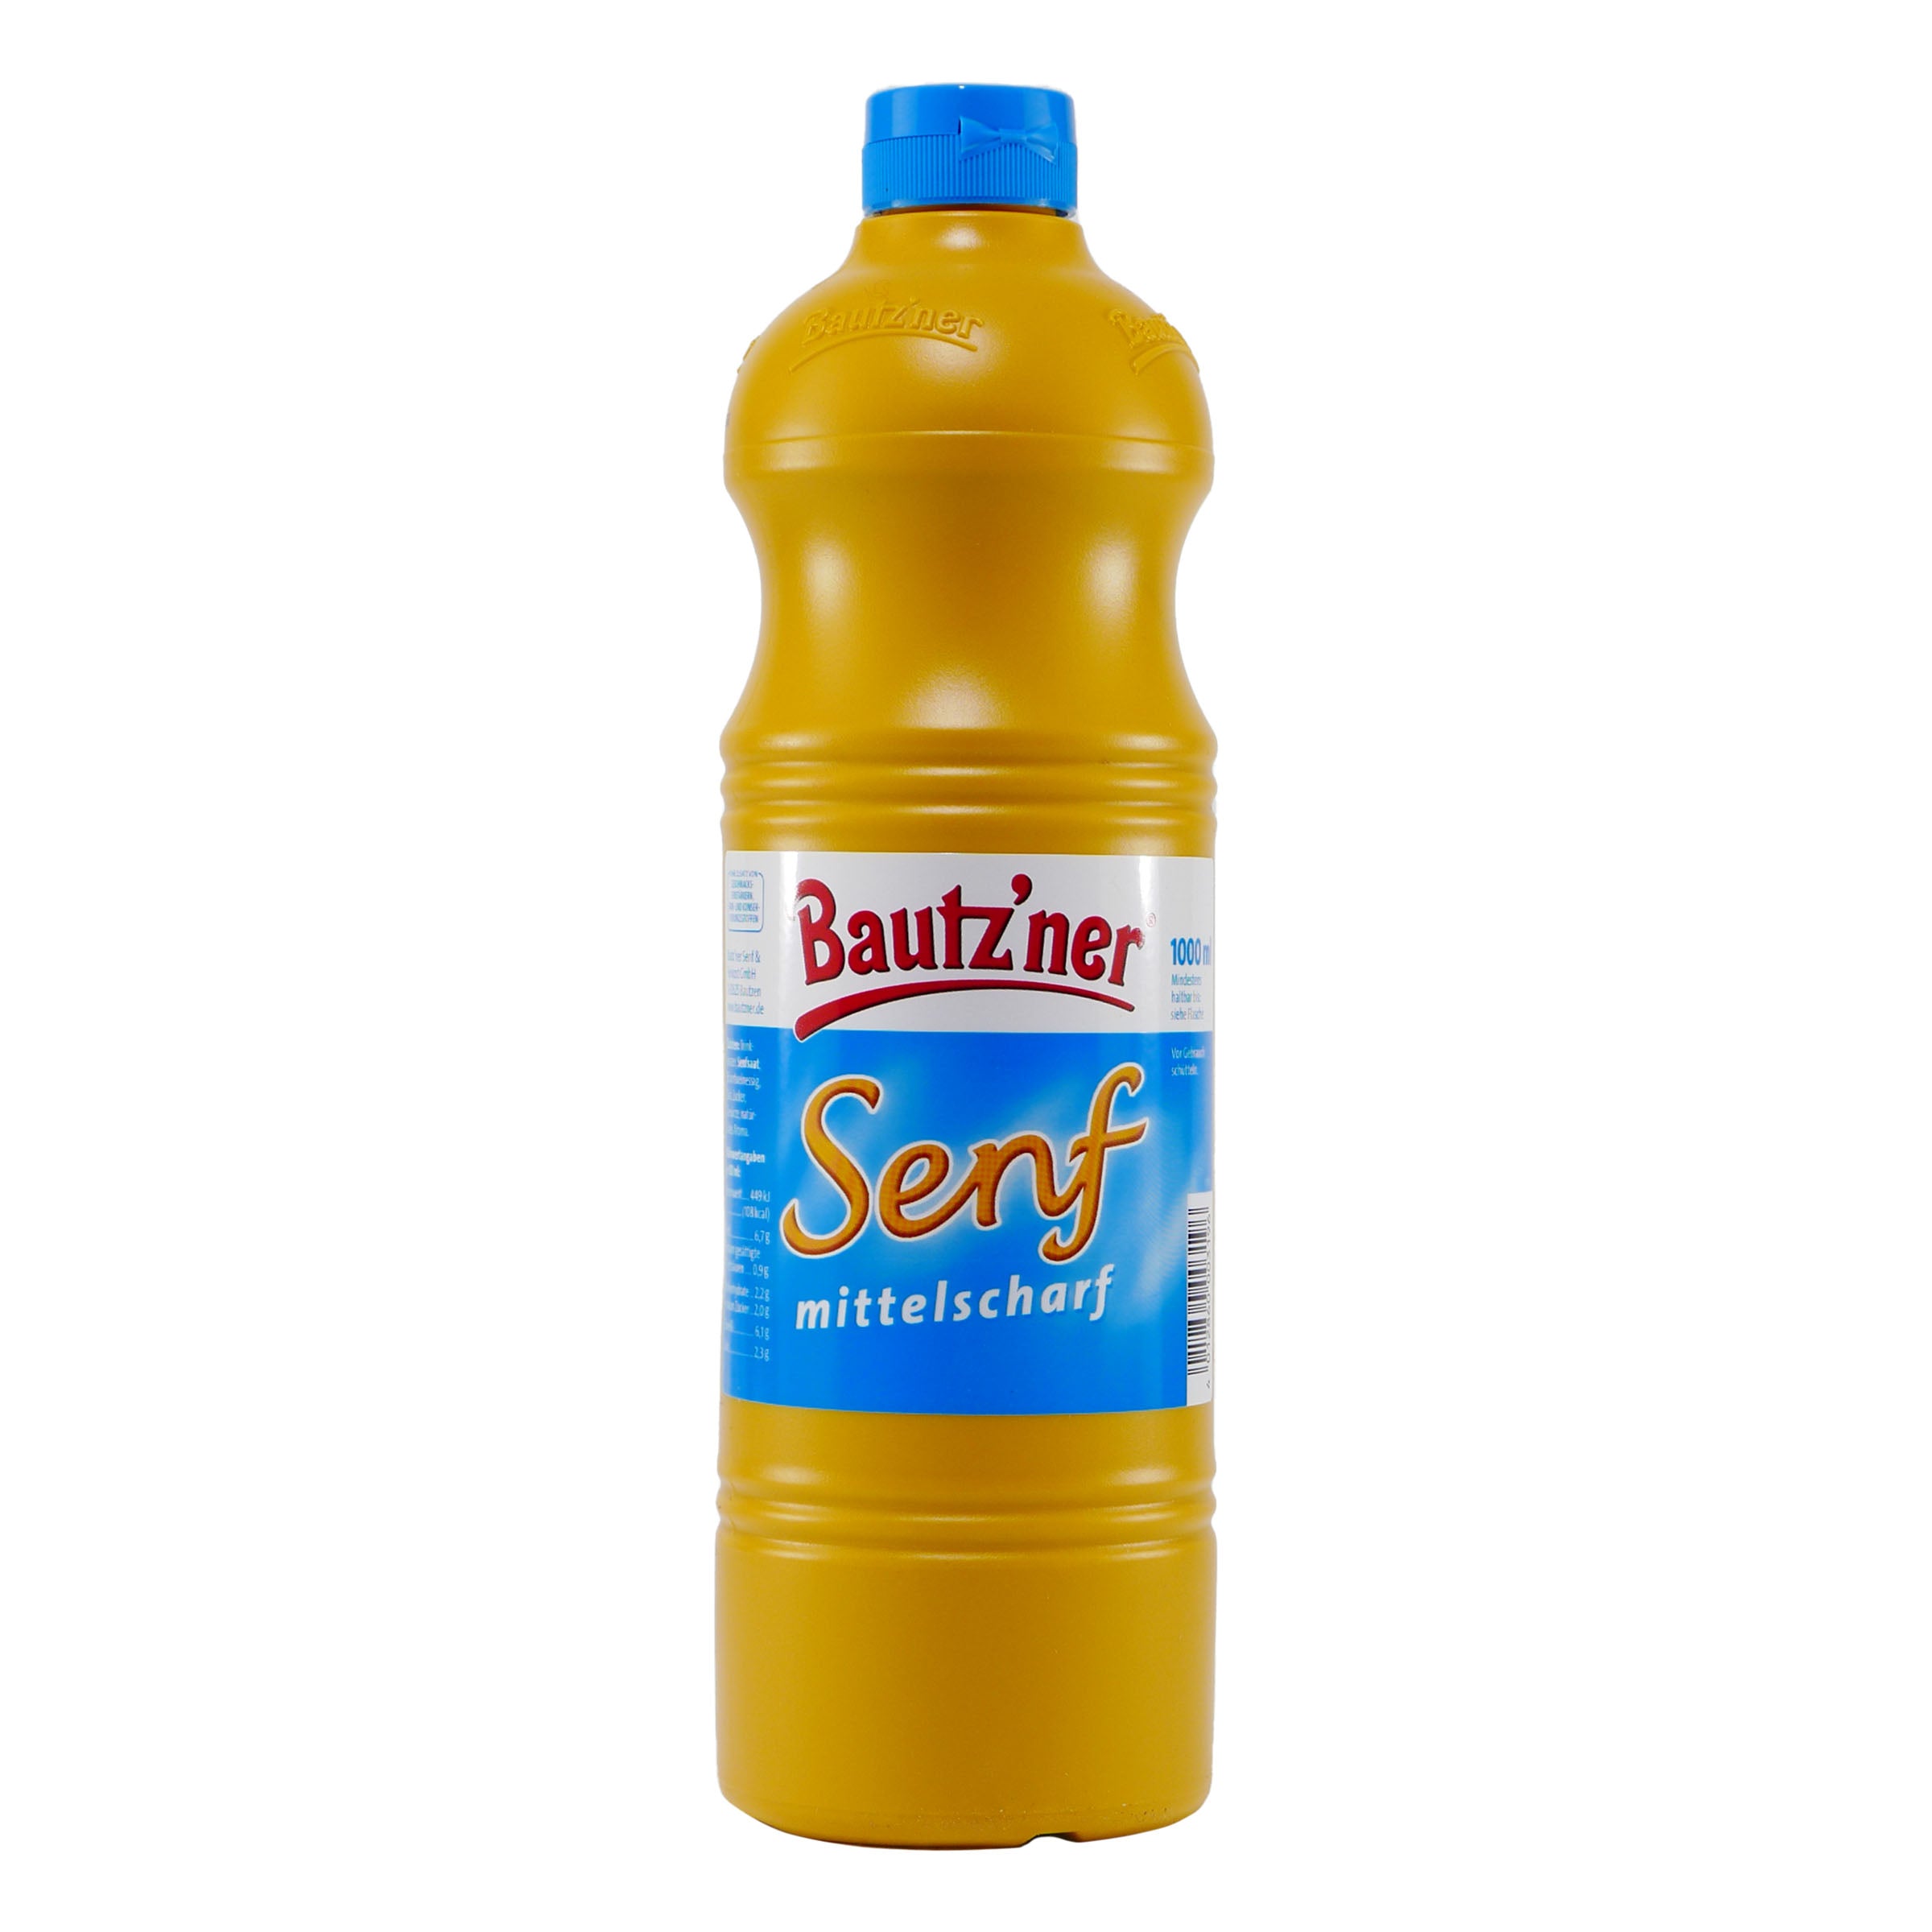 Bautzner Senf -mittelscharf- (12 x 1,0L)